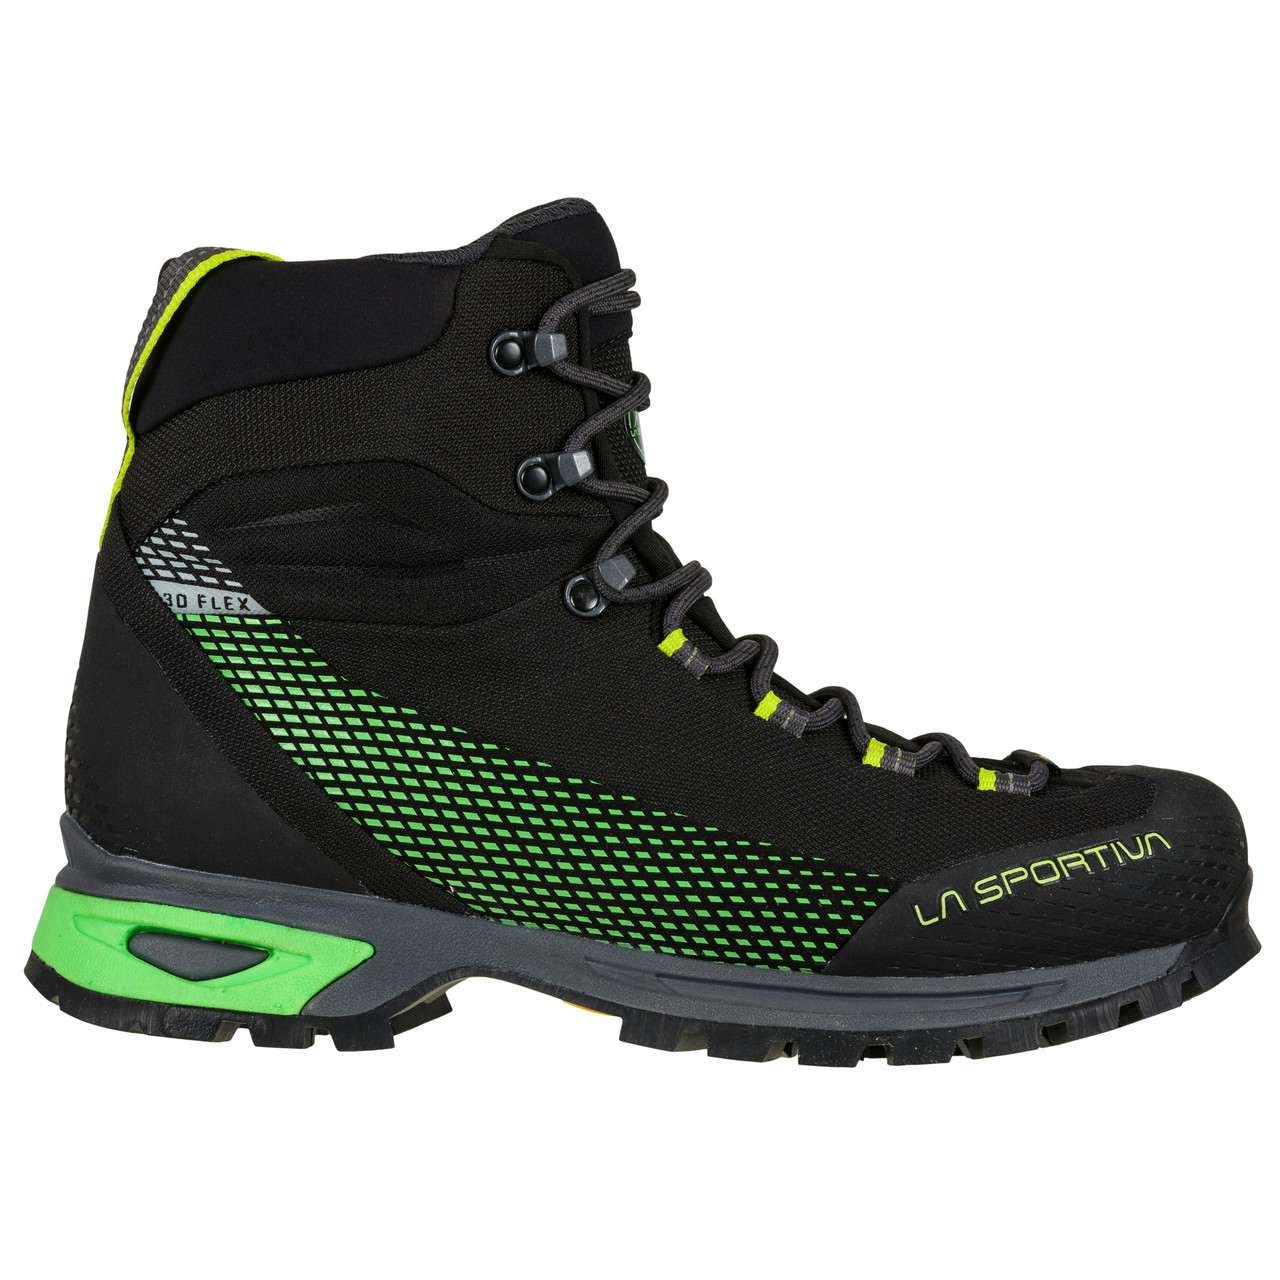 Trango TRK Gore-Tex Light Trail Shoes Black/Flash Green